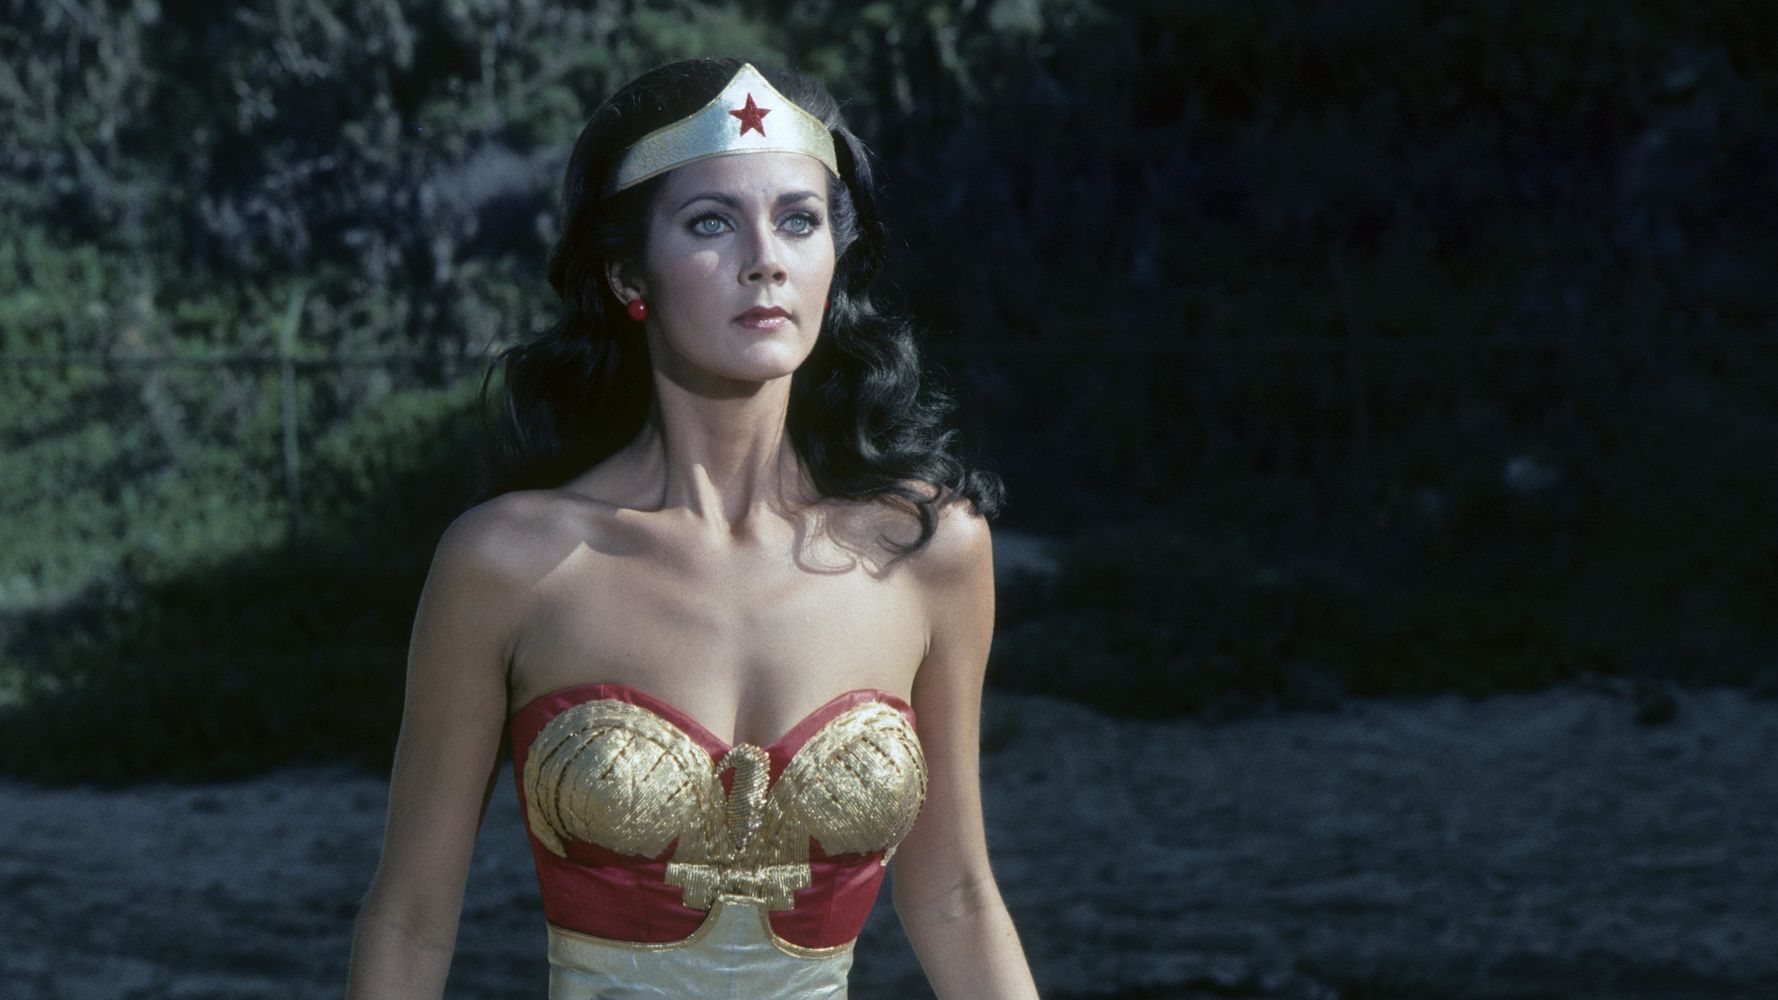 1778px x 1000px - Lynda Carter, The Original Wonder Woman, Shares Her Own Me Too Story |  HuffPost Women